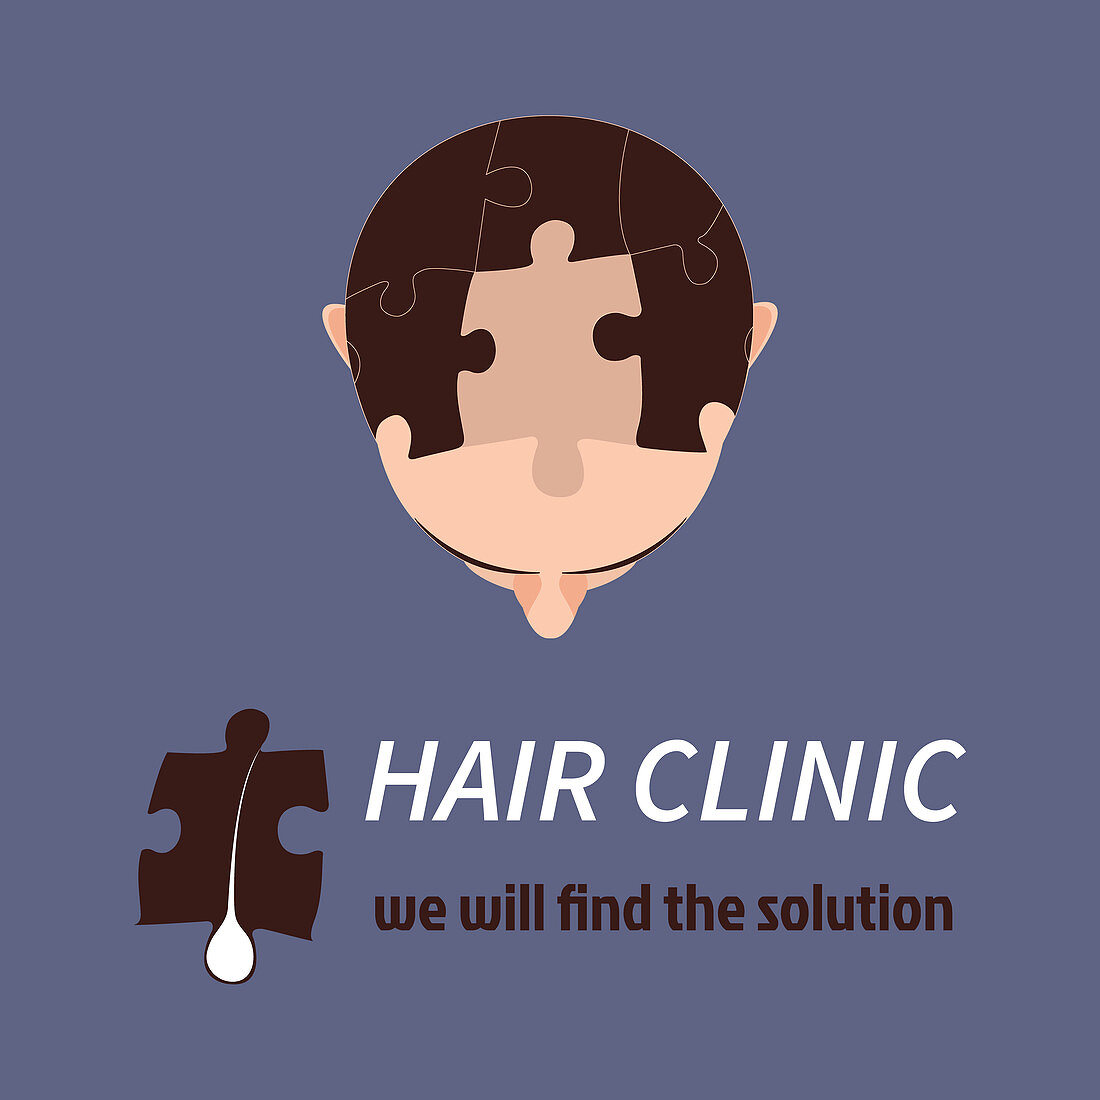 Hair loss treatment, conceptual illustration